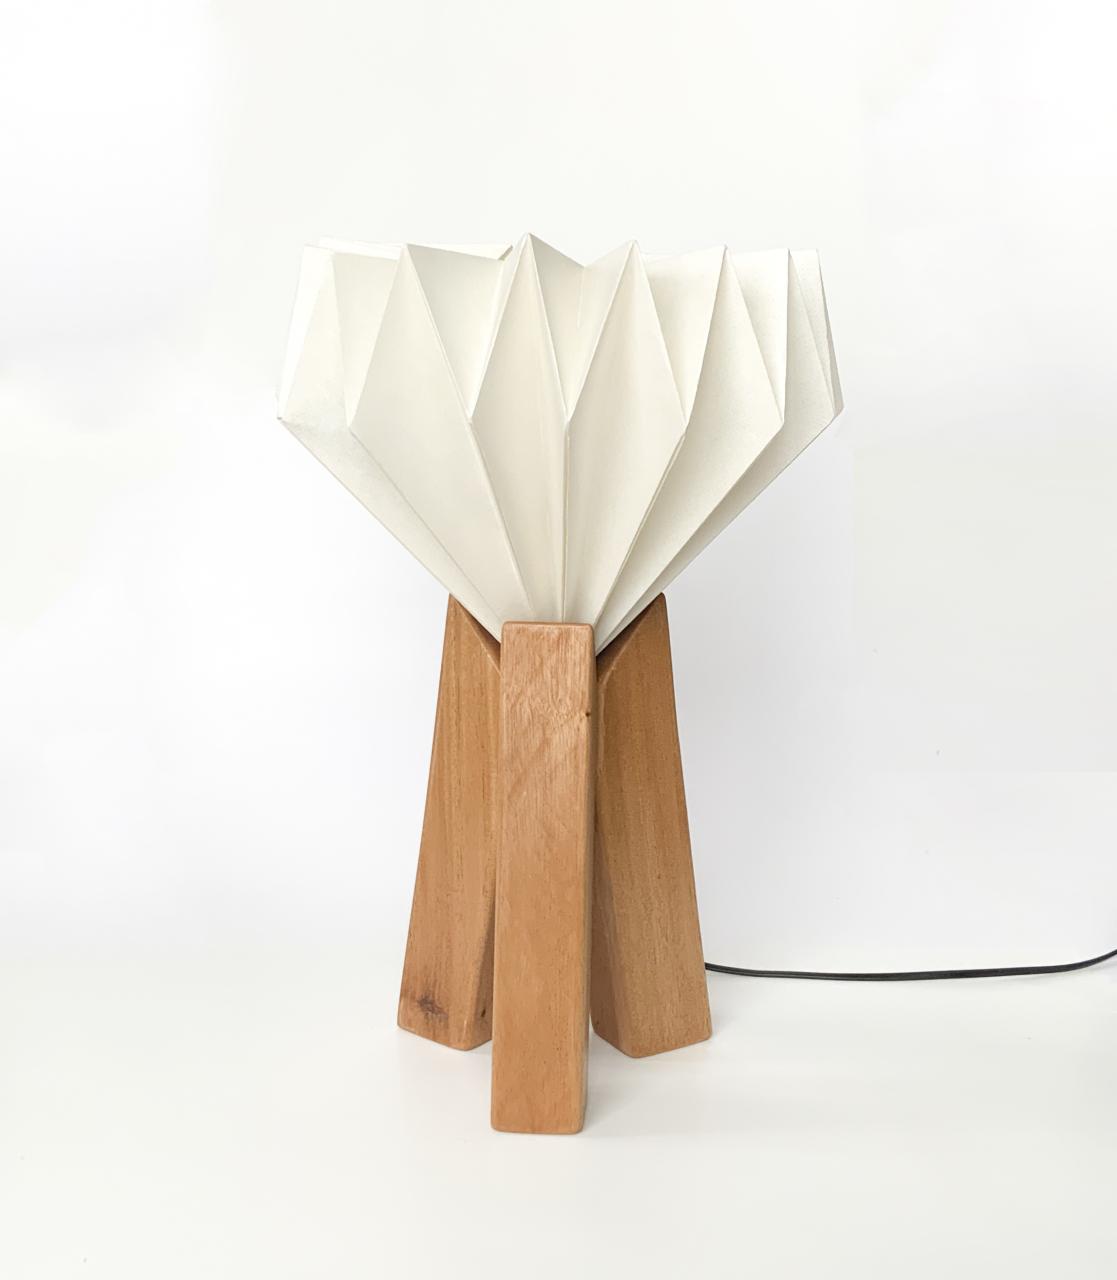 Innovative lamp design focusing on three wooden pillars.